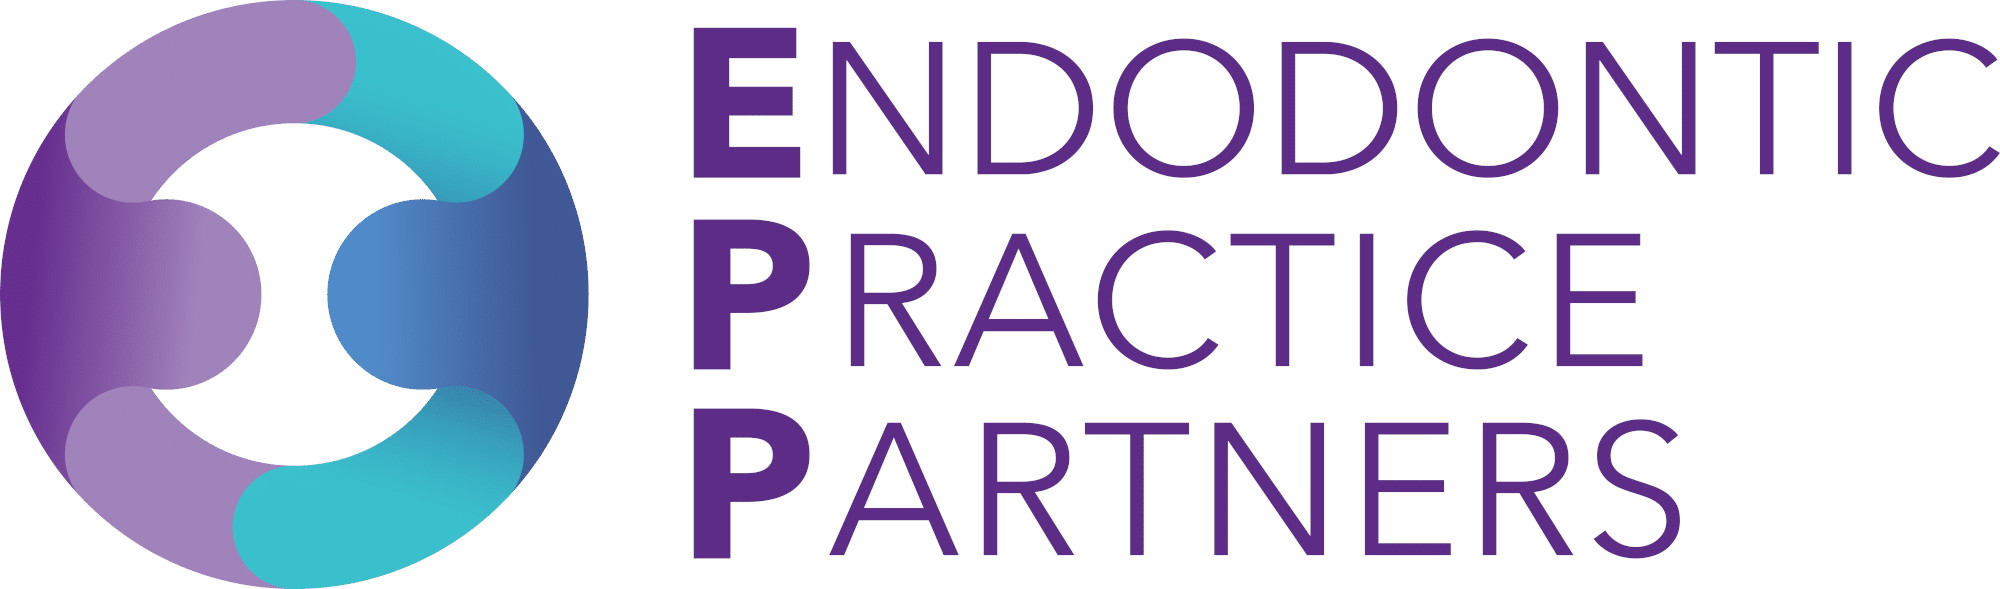 Endodontic Practice Partners